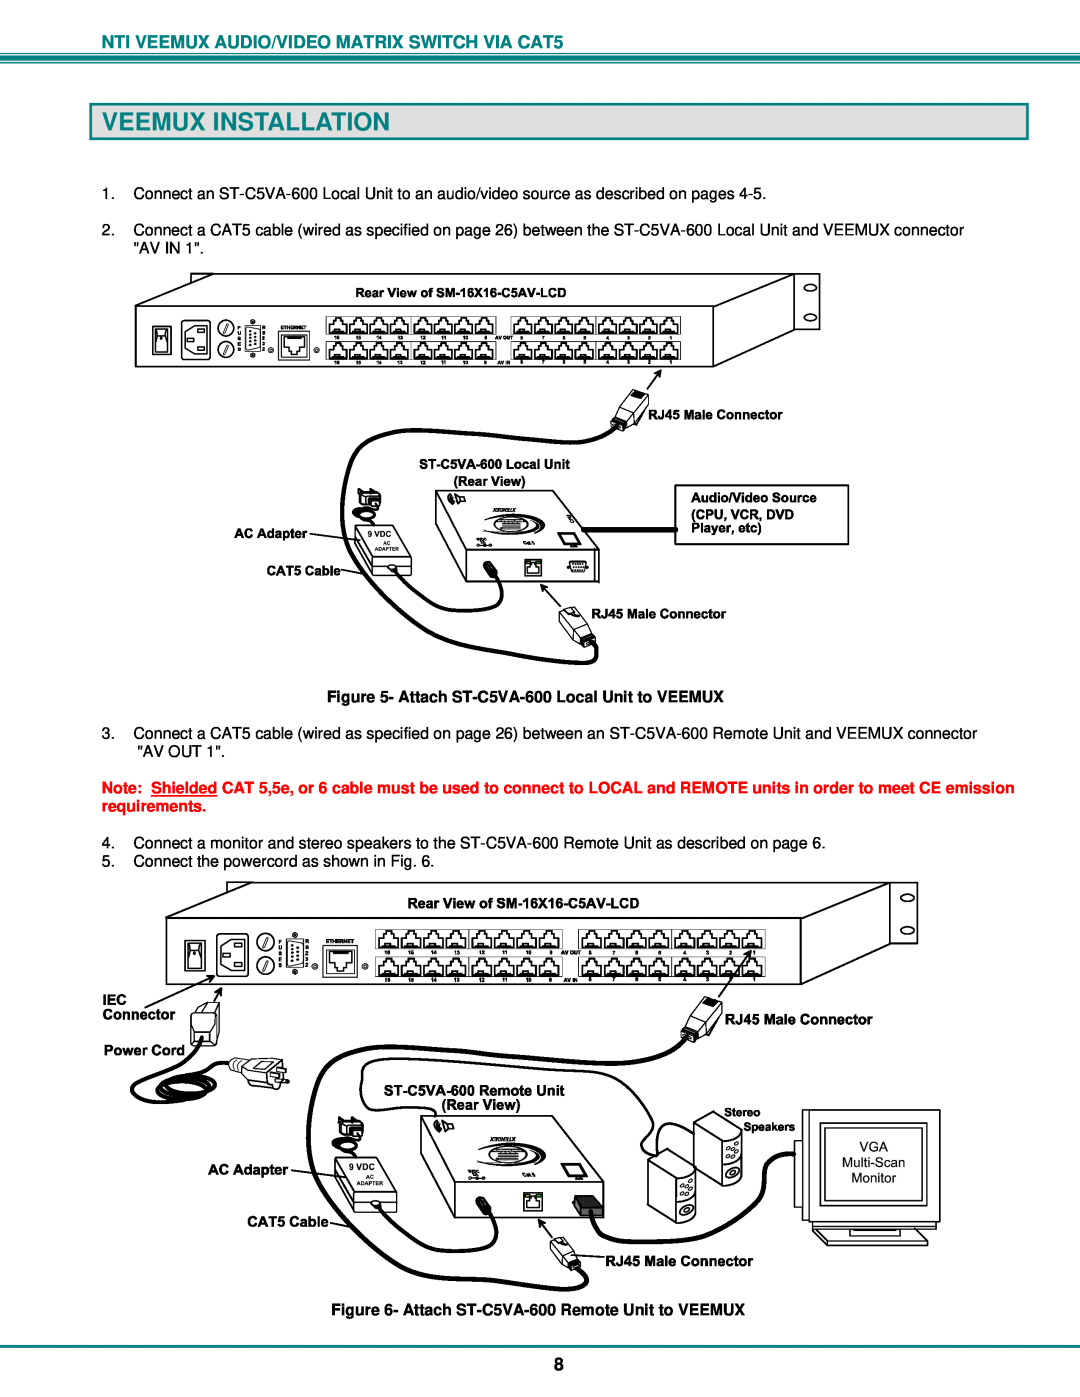 Network Technologies SM-nXm-C5AV-LCD operation manual Veemux Installation, NTI VEEMUX AUDIO/VIDEO MATRIX SWITCH VIA CAT5 